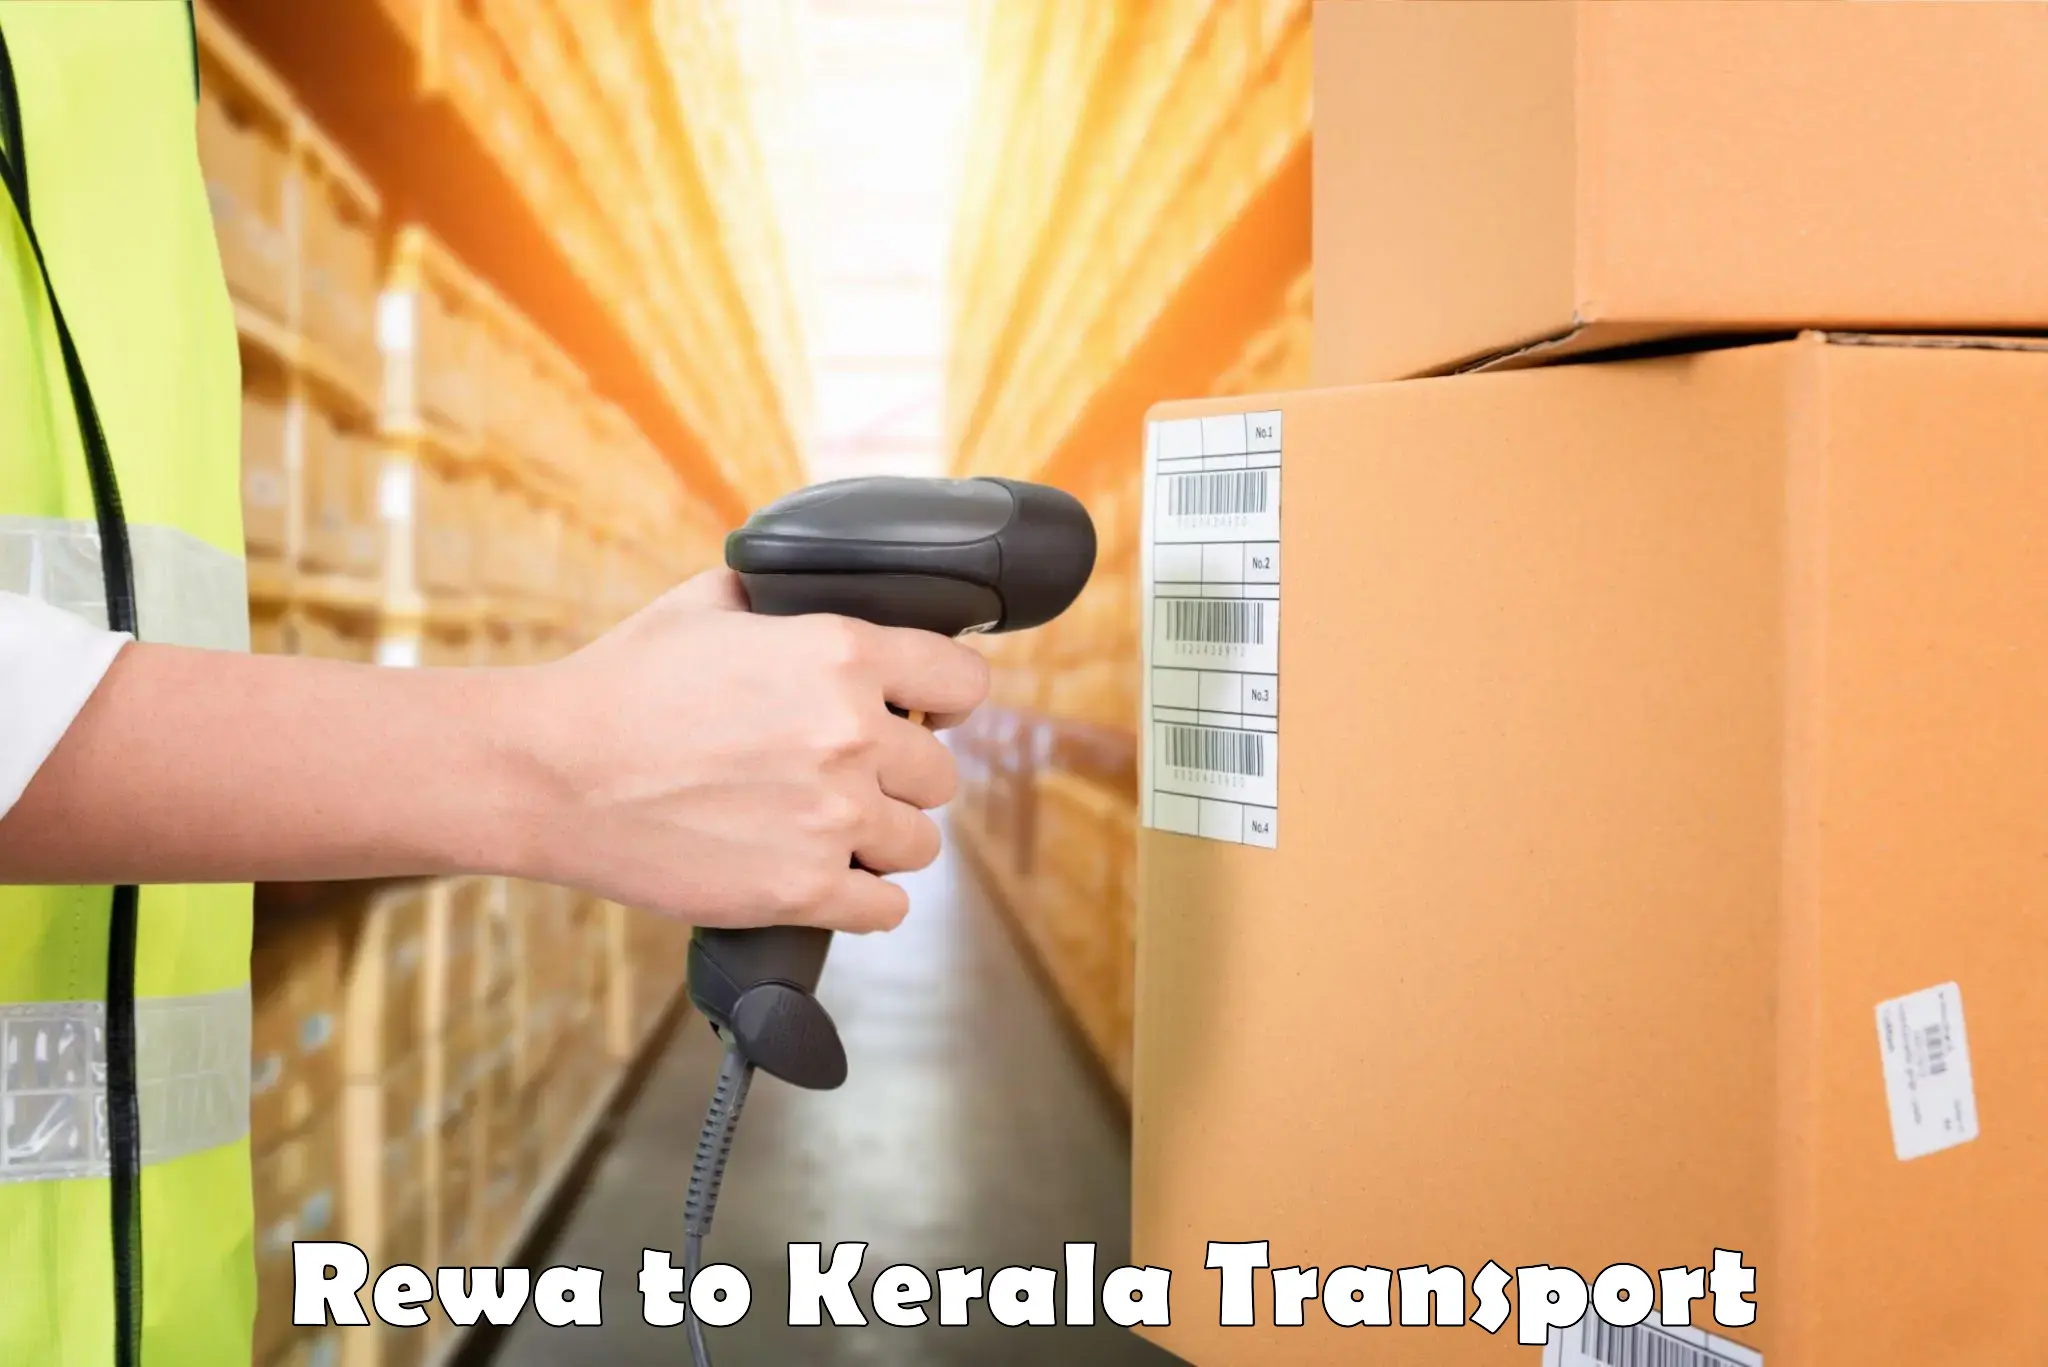 Online transport service Rewa to Kerala